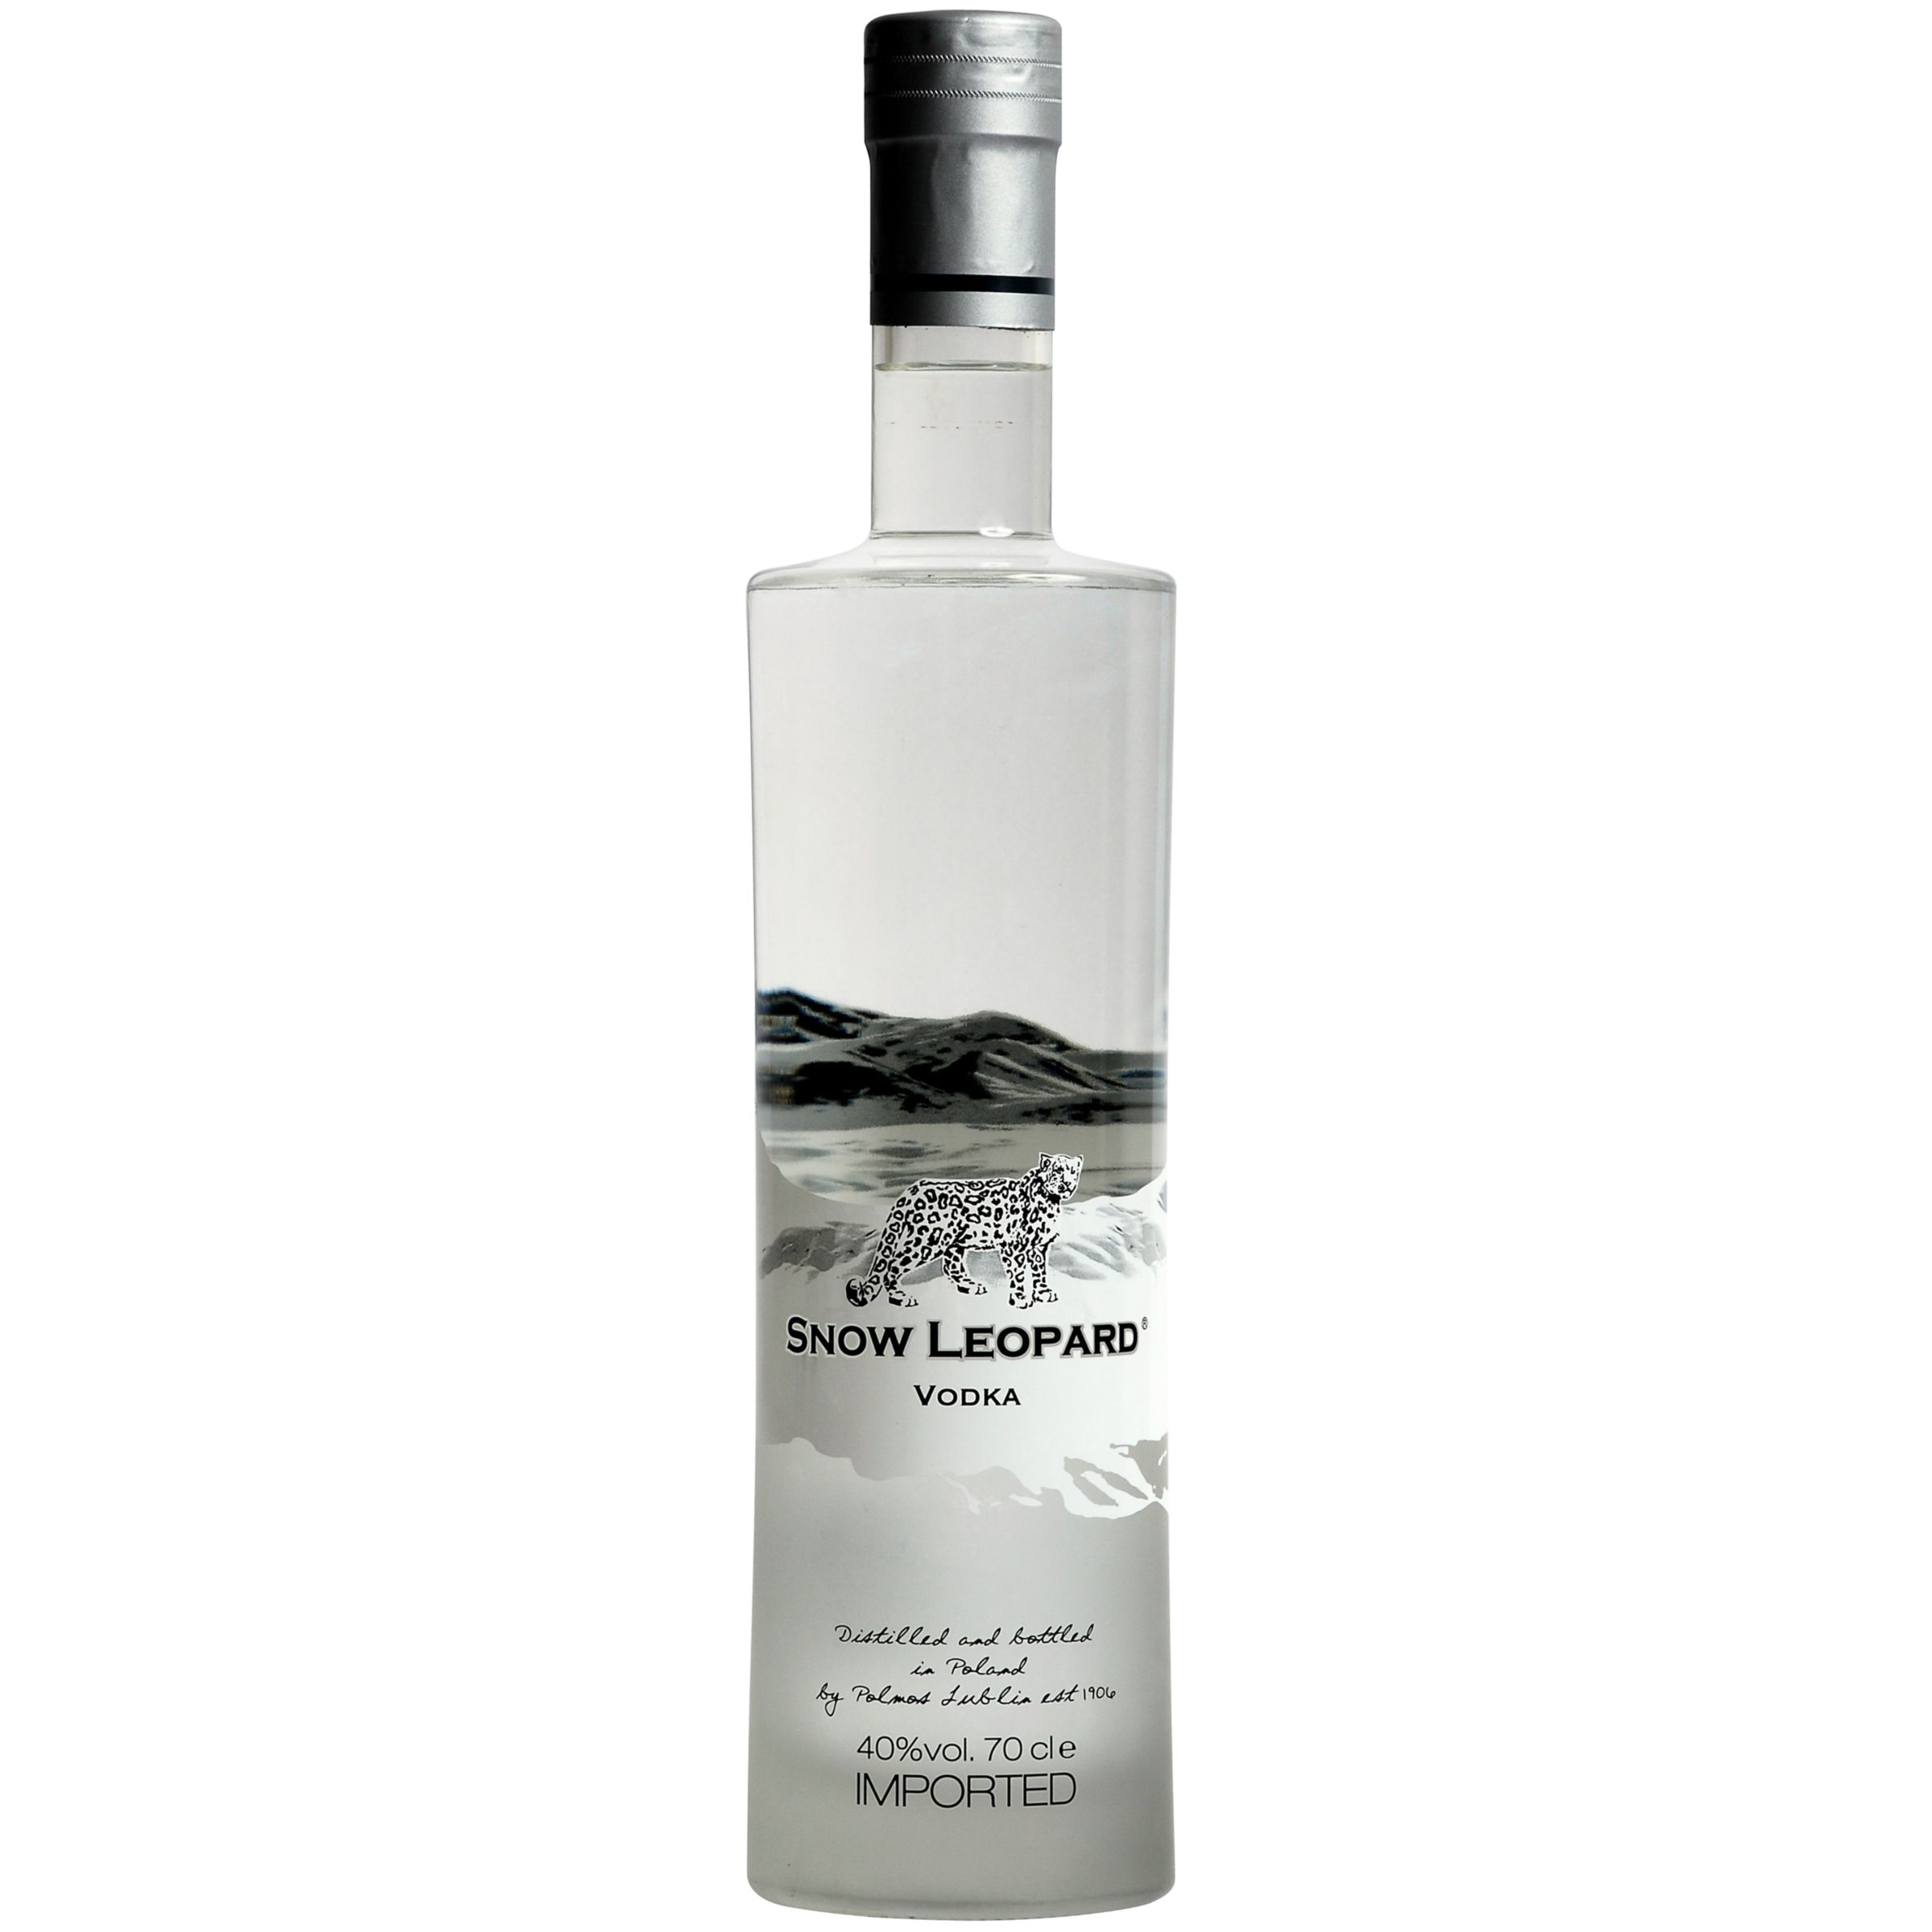 Snow Leopard Vodka at John Lewis